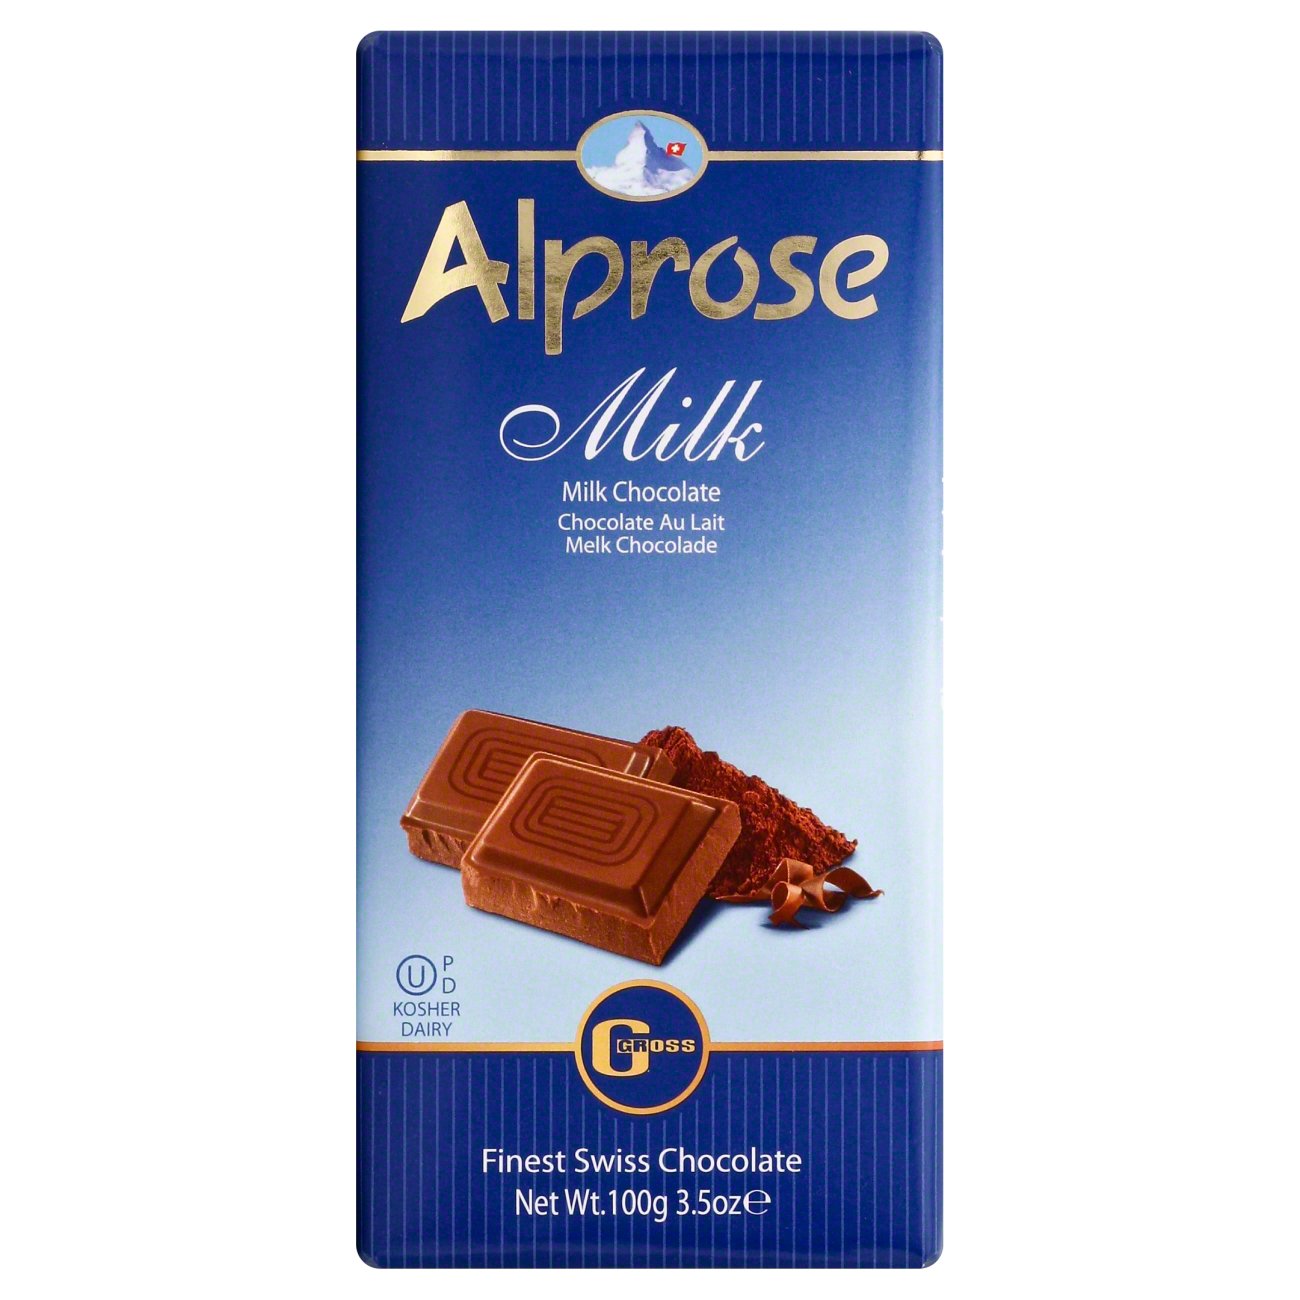 Swiss Selection White Milk Chocolate Bar - Passover